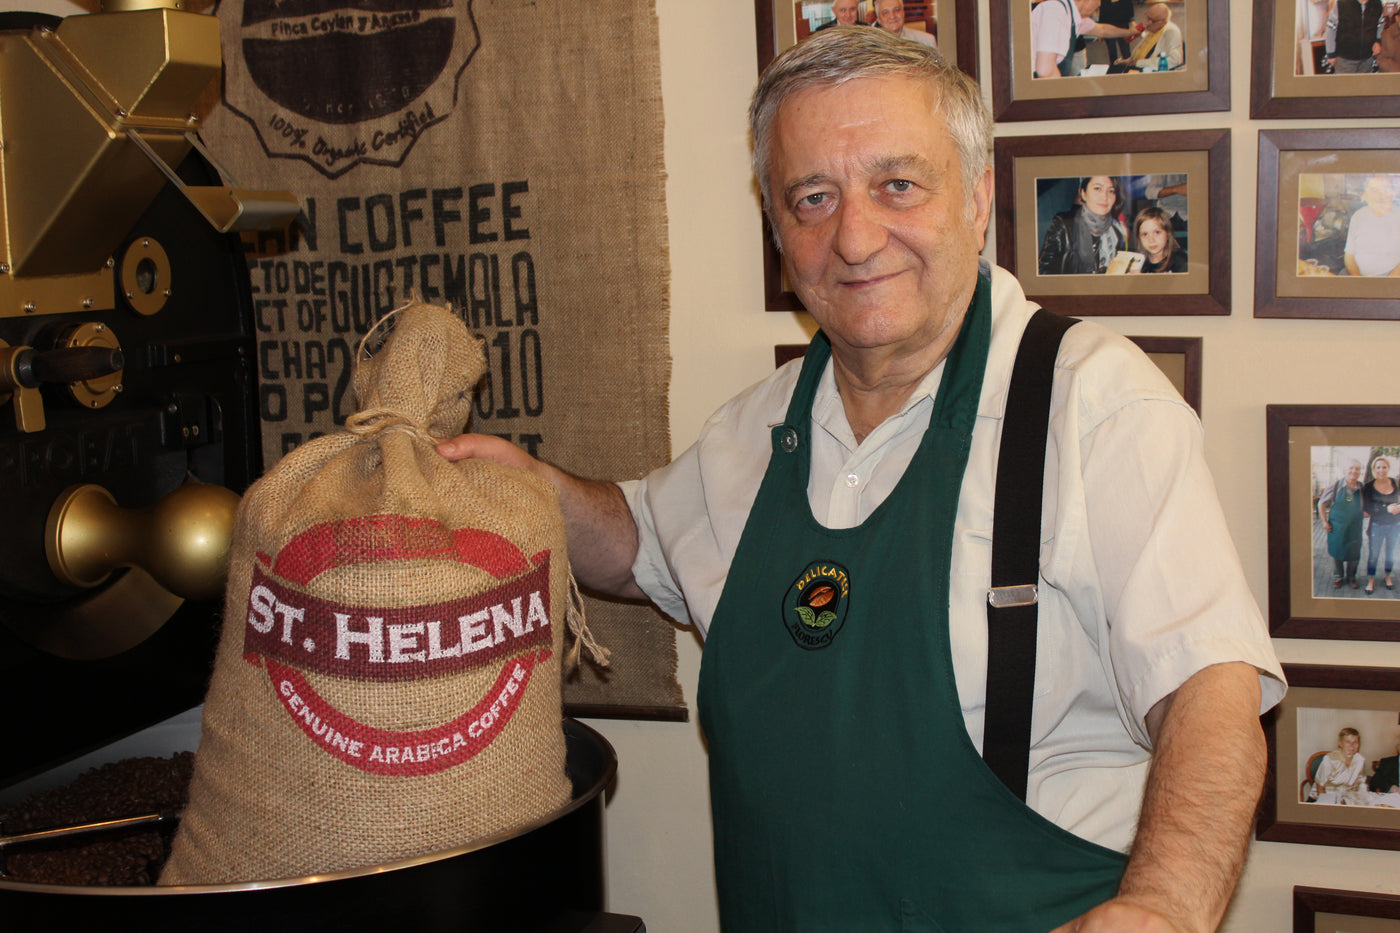 St Helena coffee farmer holding a sack of coffee beans